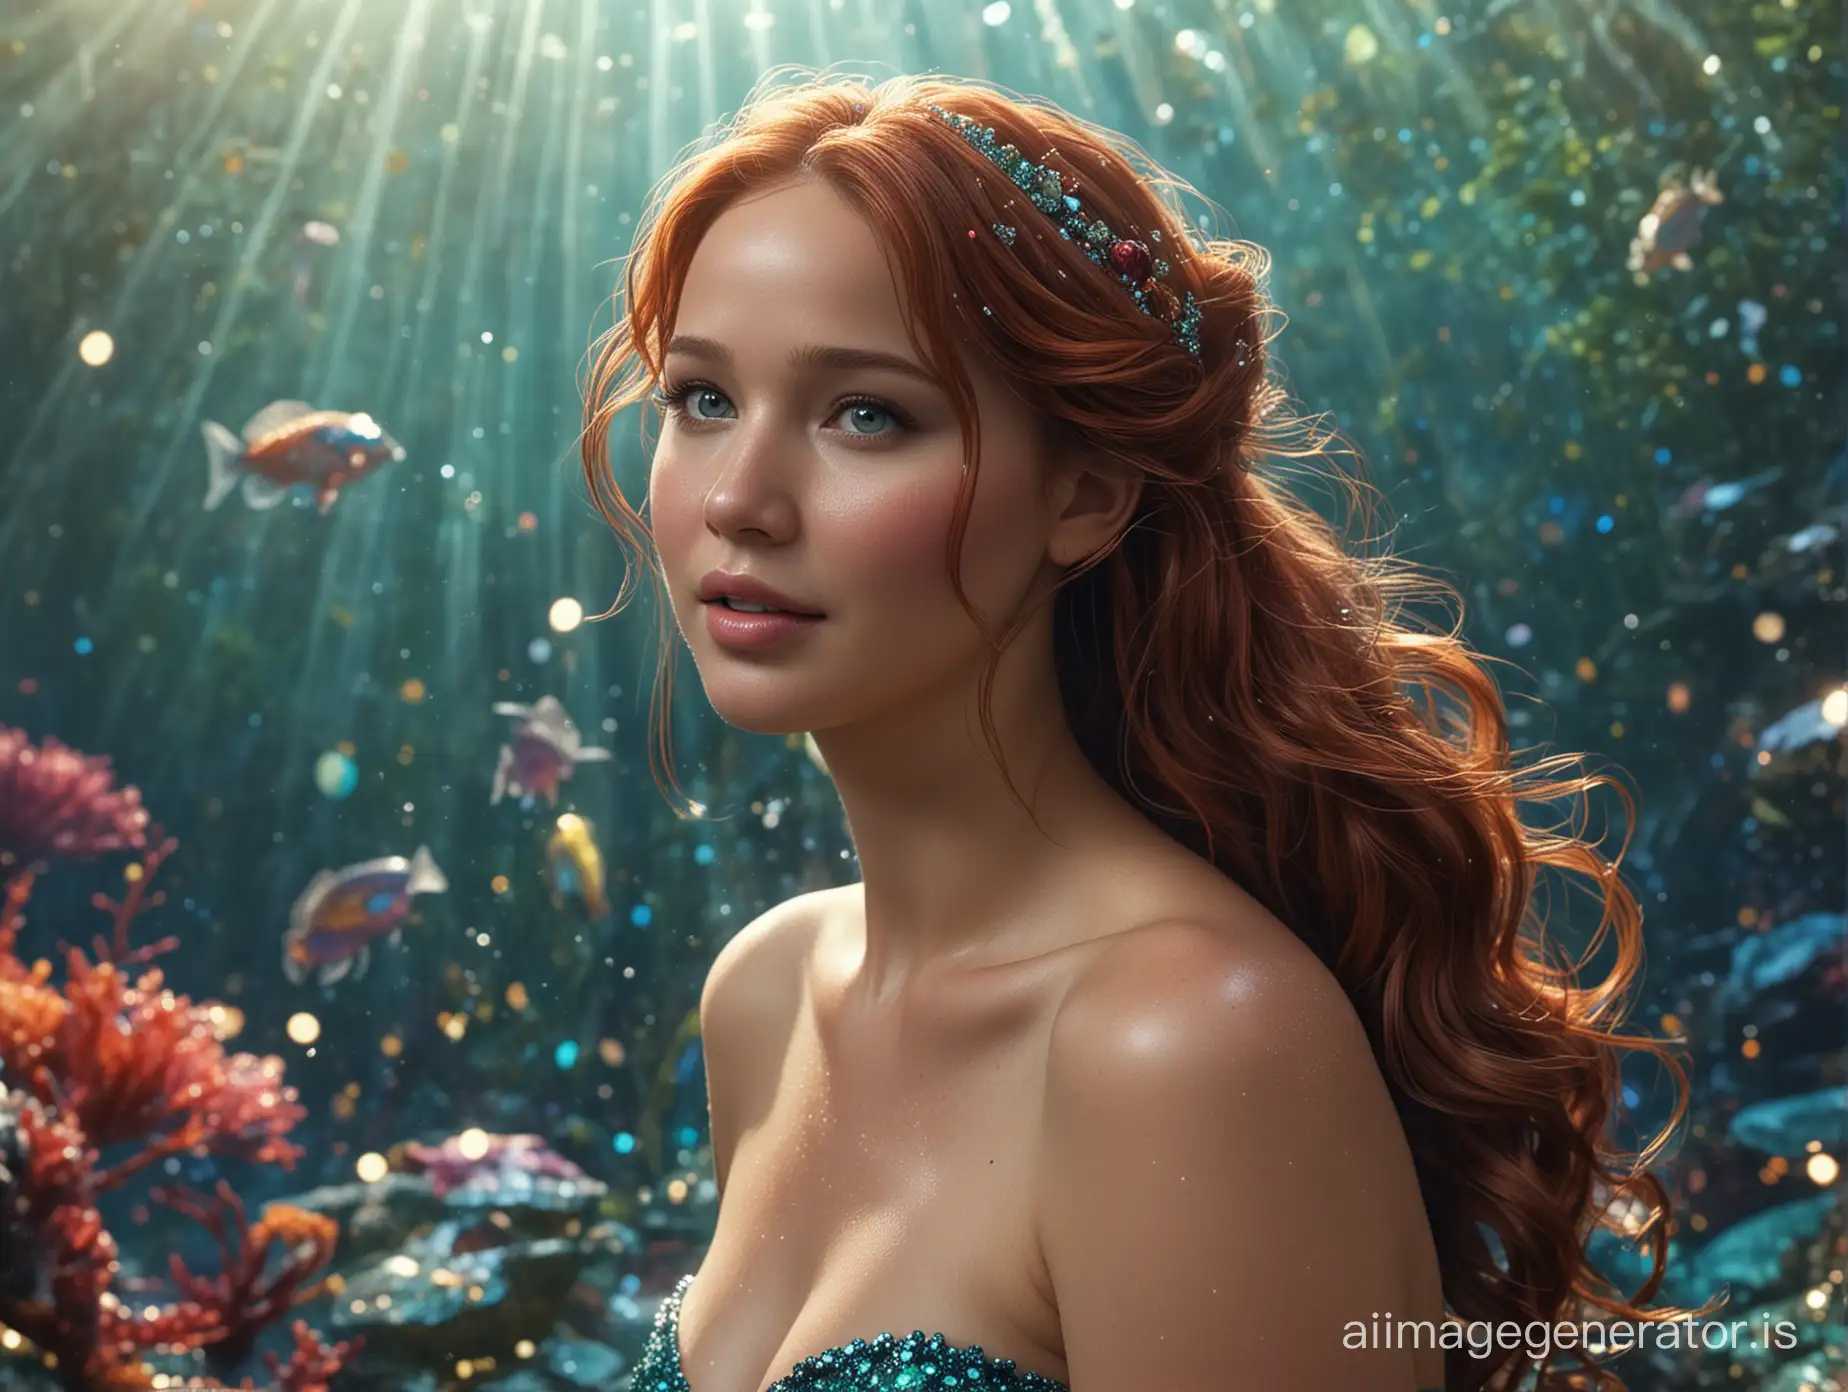 the Little Mermaid Jennifer Lawrence, vogue,128k, 300dpi, VR, ultra-photorealistic, ultra-microdetailed, hyperdetalization, hyperrealism ,bright juicy colors, bokeh, glitter, clear contours of the edge line, octane render